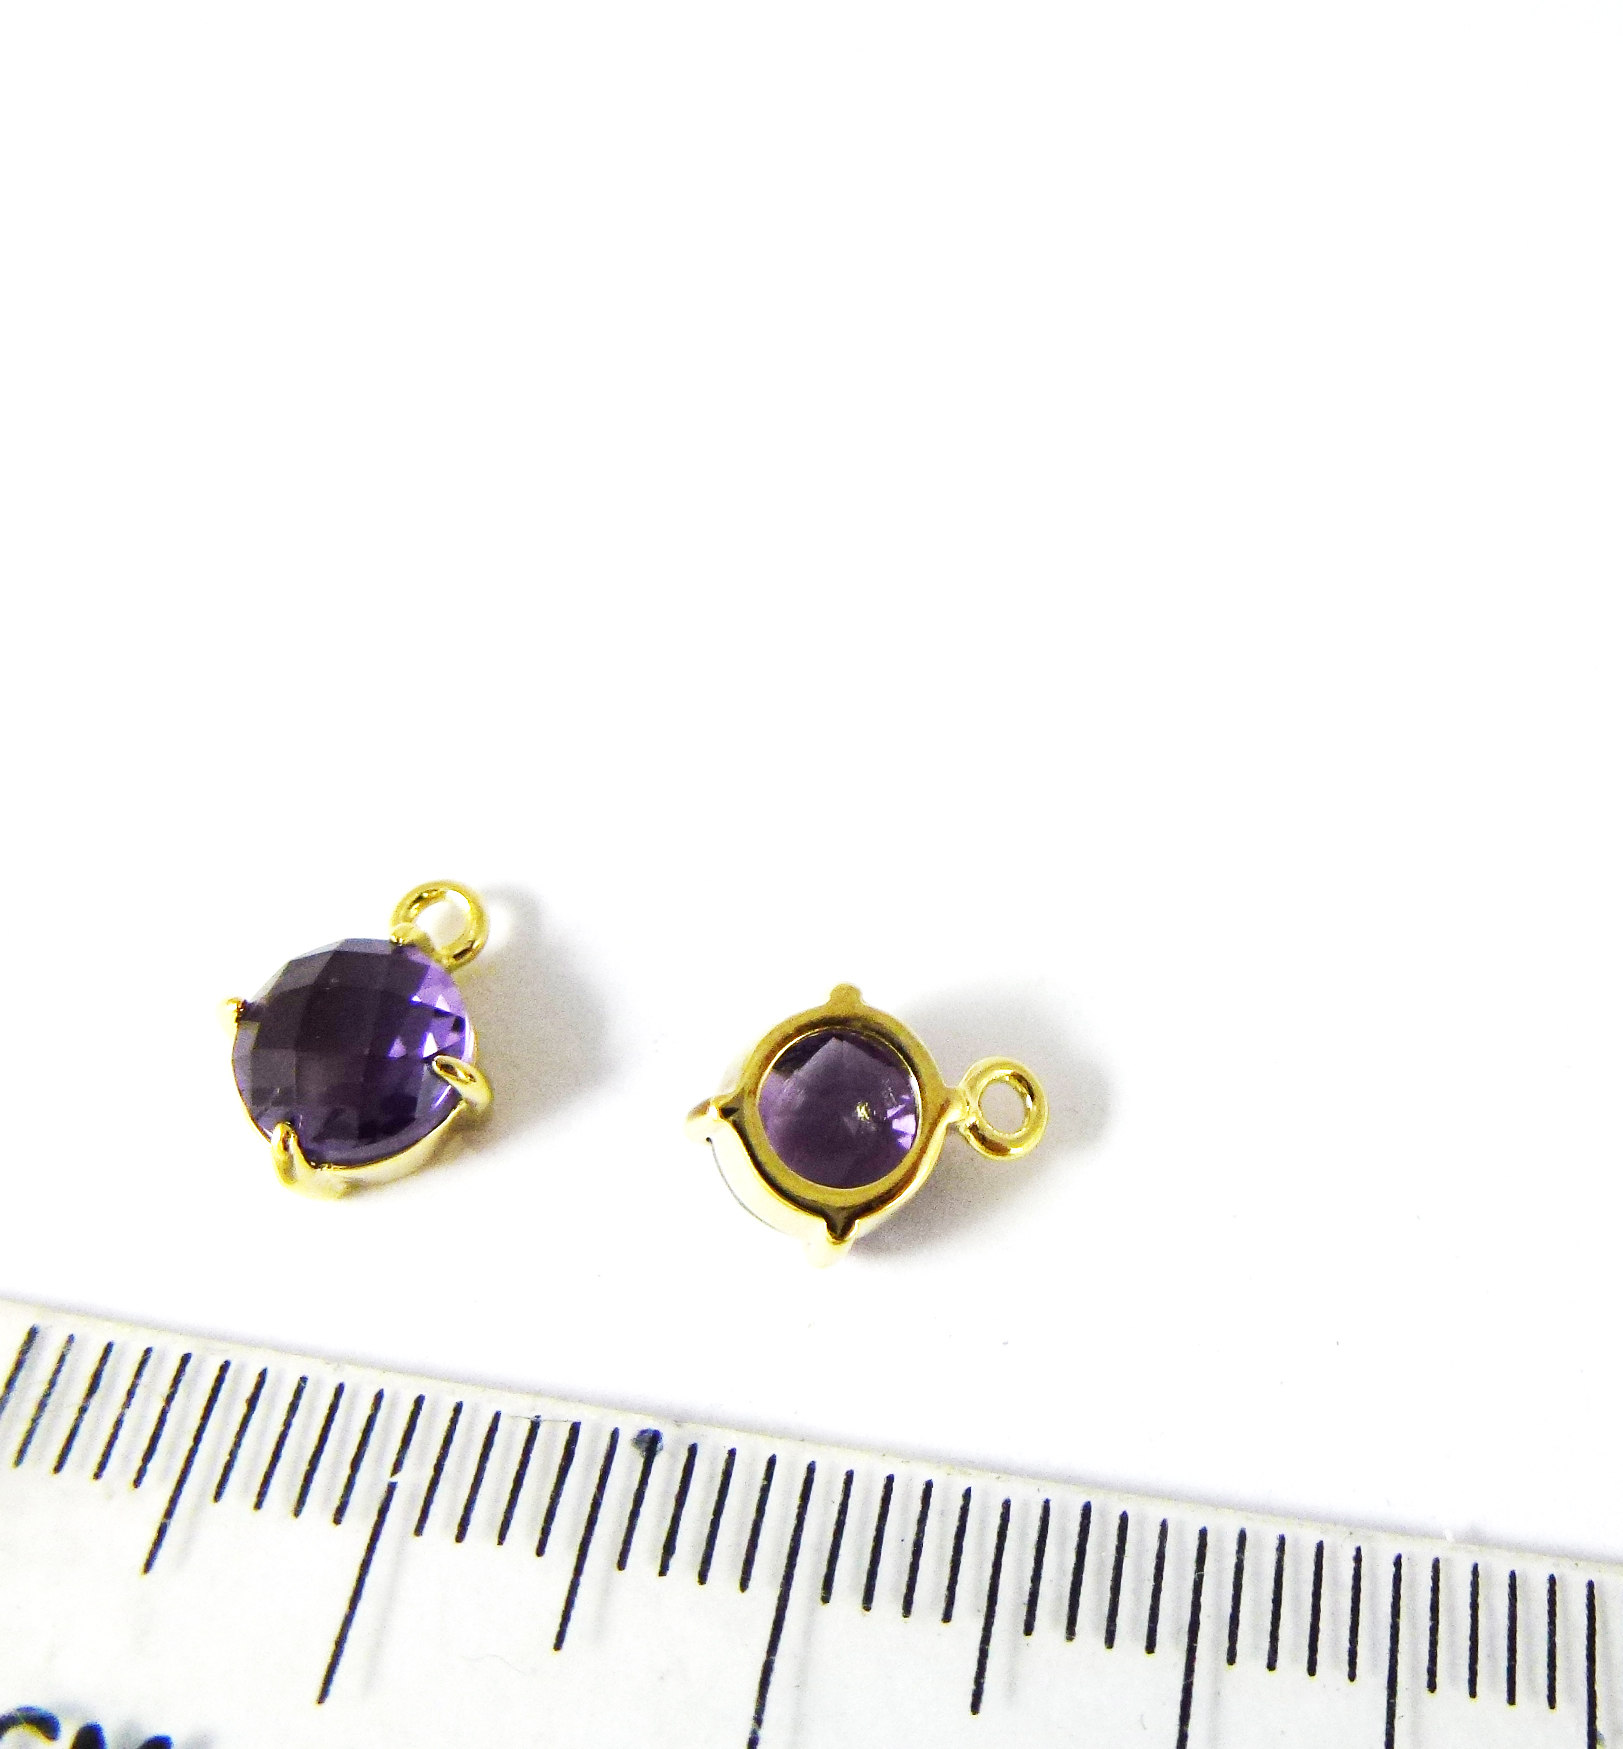 6mm銅鍍金色單孔四爪圓形誕生石-二月紫水晶